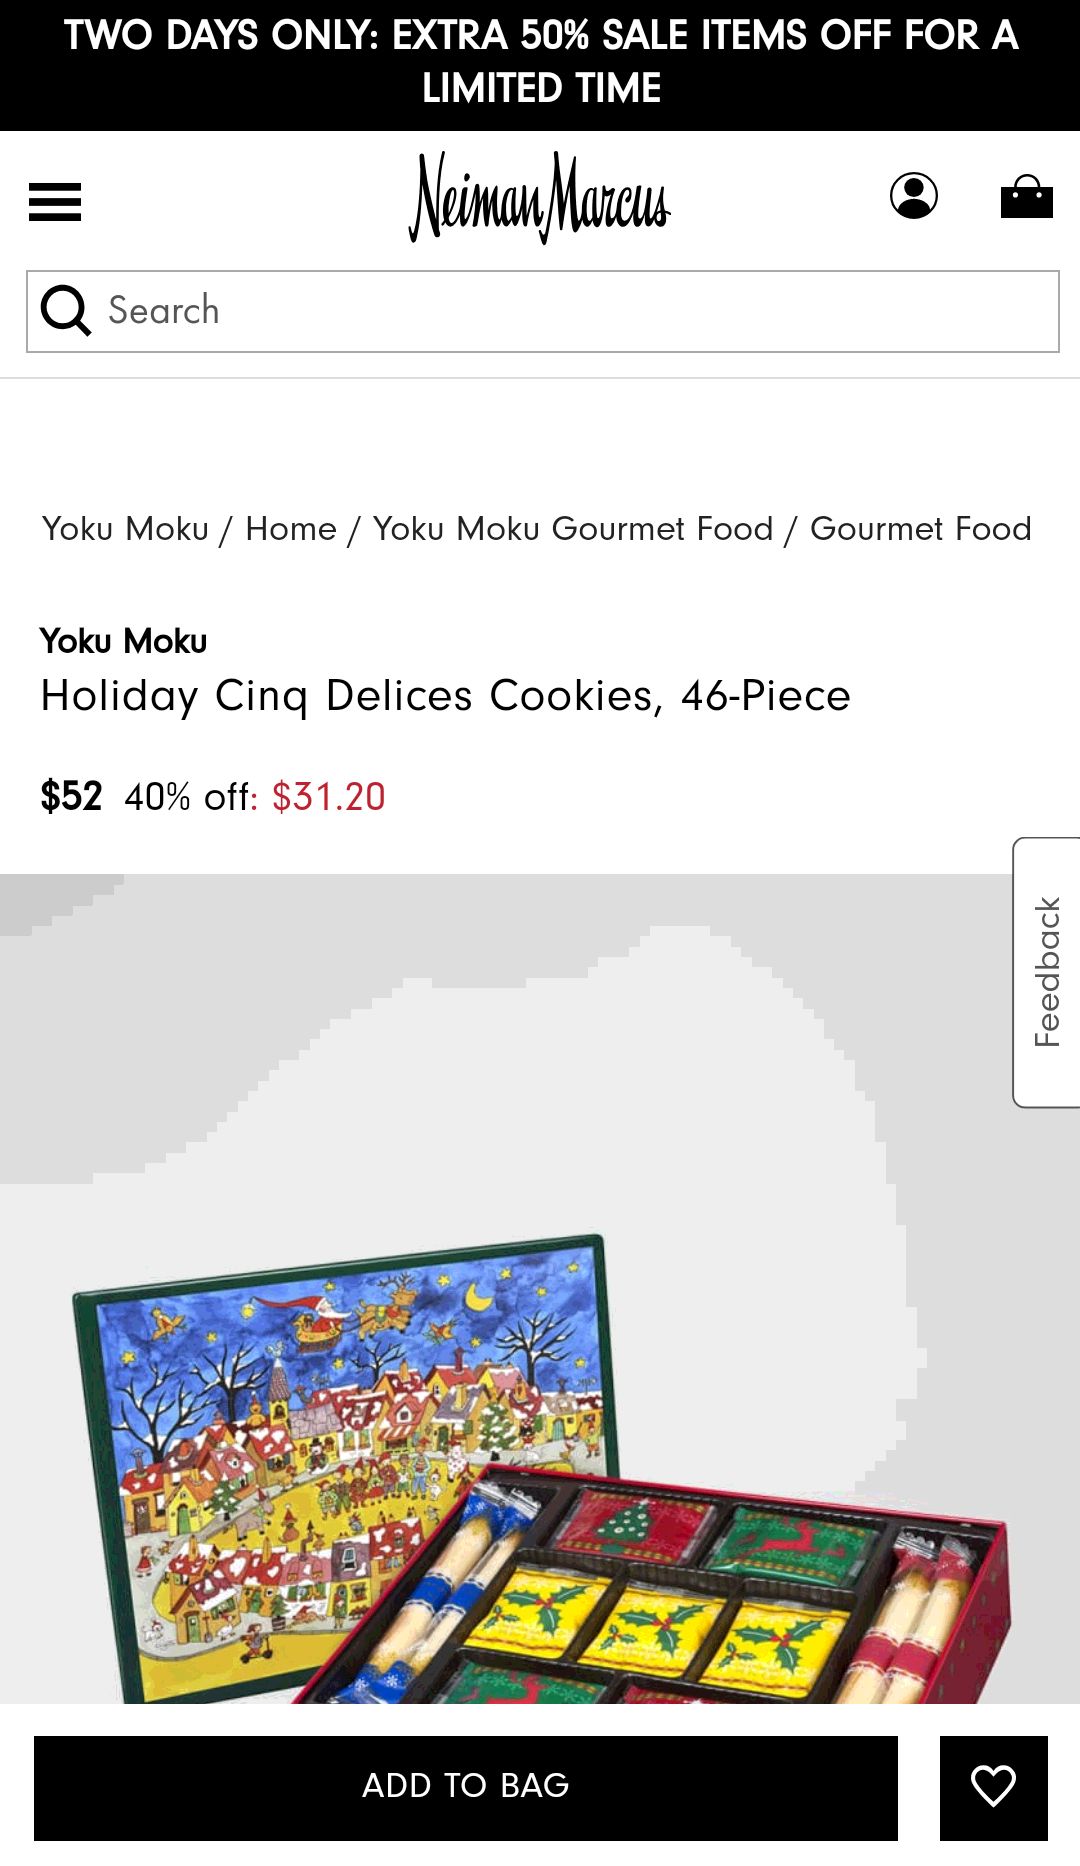 Yoku Moku Holiday Cinq Delices Cookies, 46-Piece | Neiman Marcus